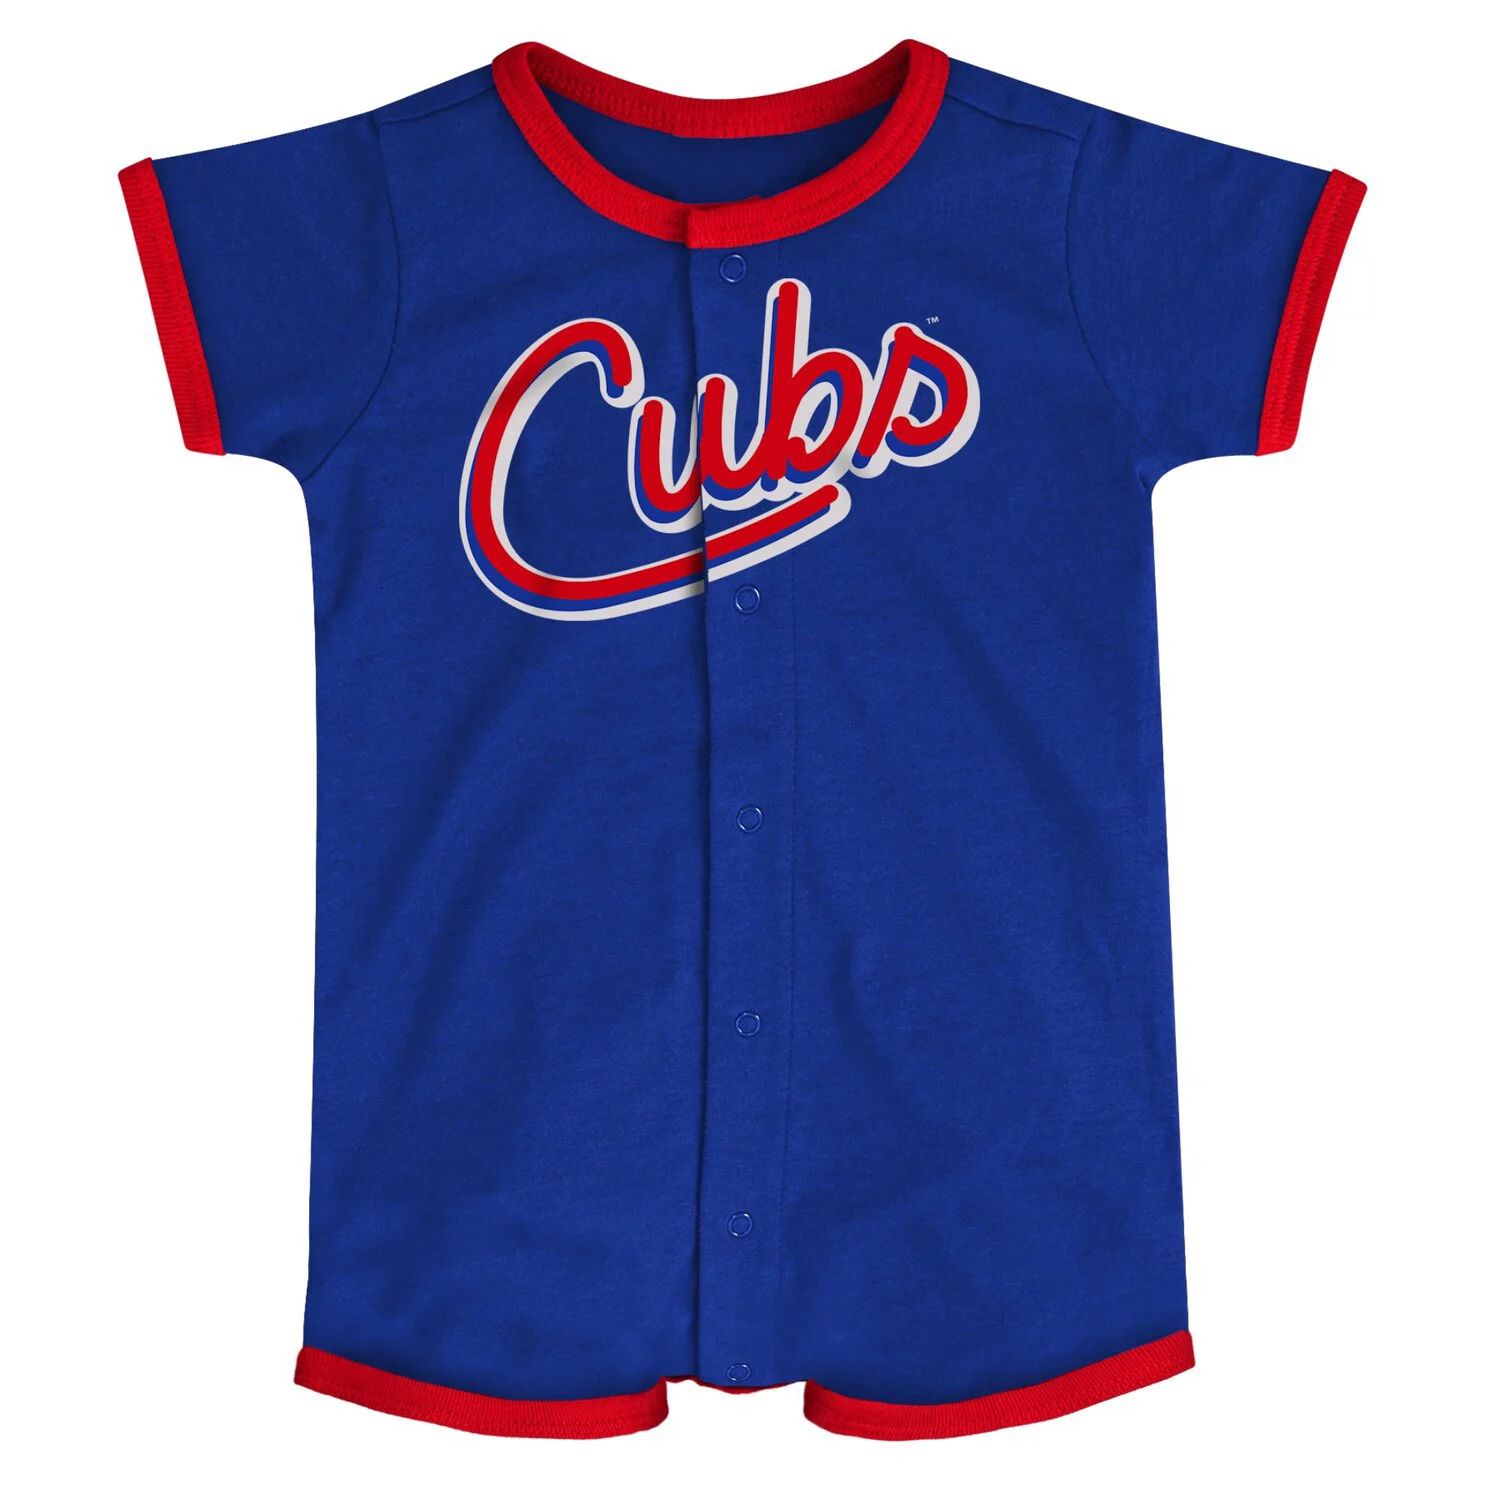 Комбинезон для младенцев Royal Chicago Cubs Power Hitter Outerstuff